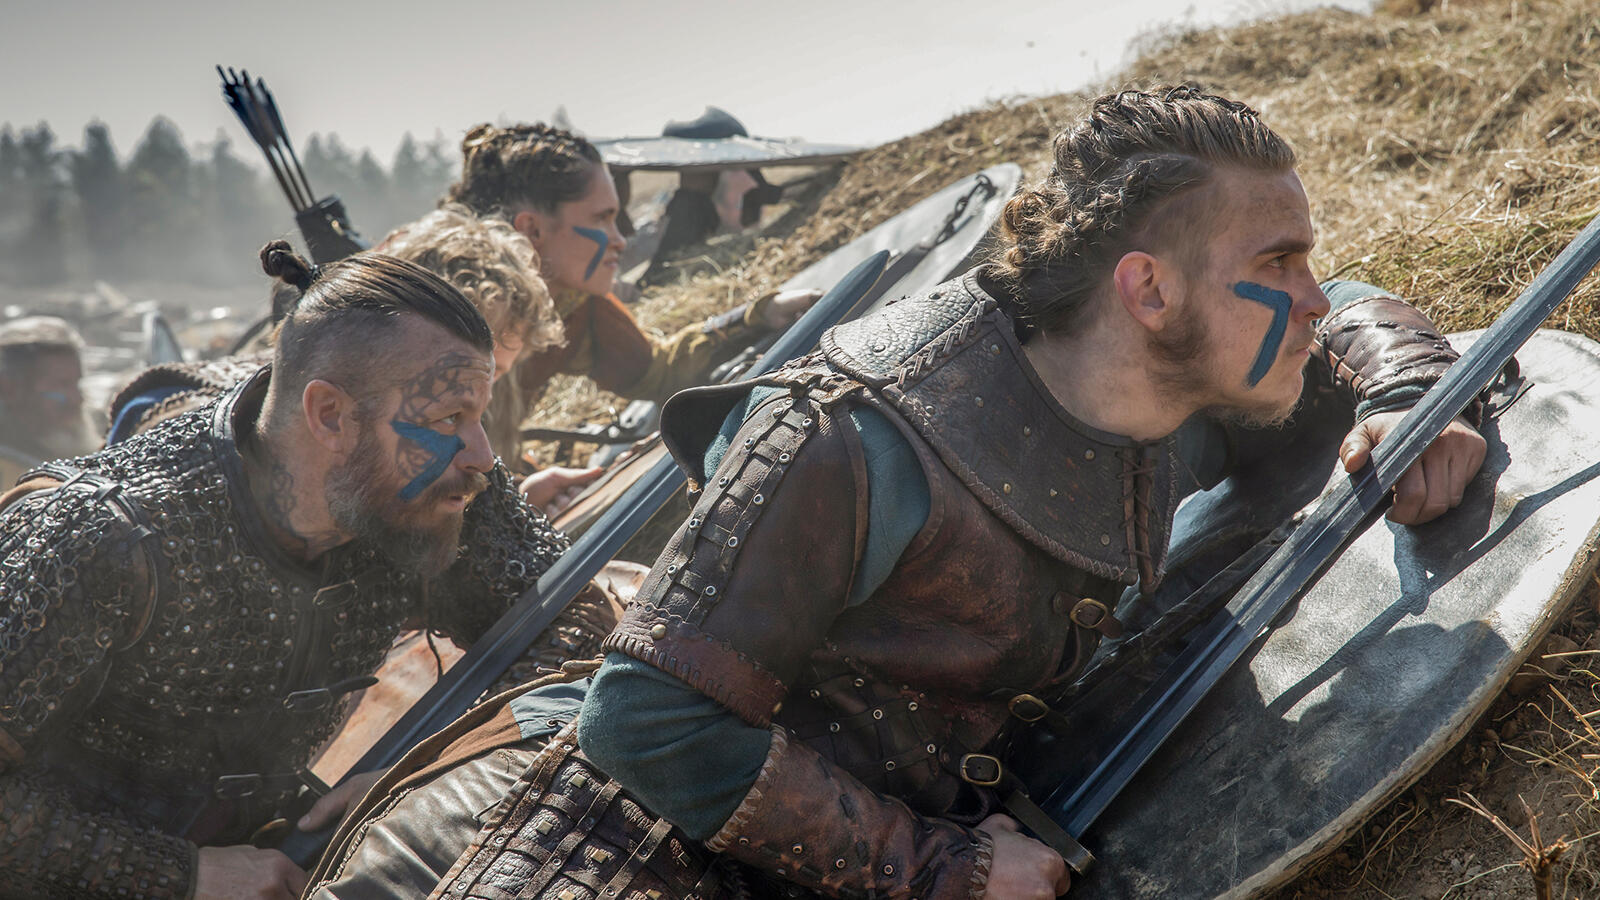 Netflix's 'Vikings: Valhalla' Announces 10 New Cast Members - mxdwn  Television